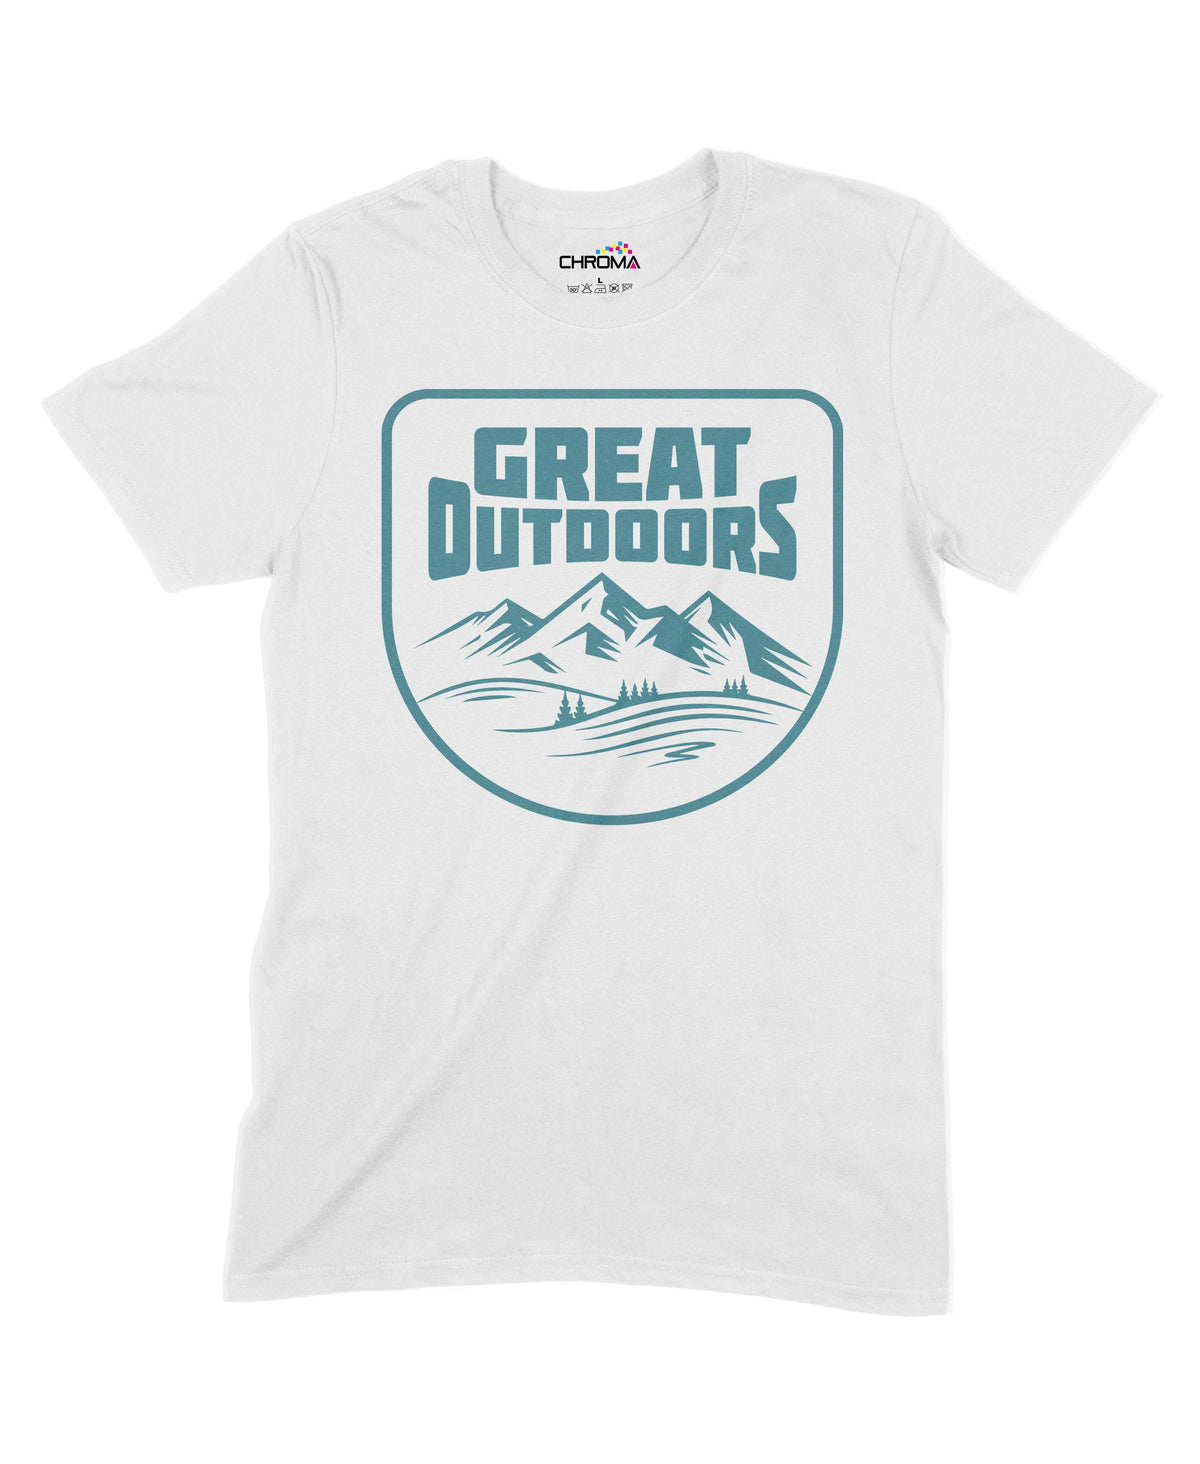 Great Outdoors Unisex Adult T-Shirt Chroma Clothing